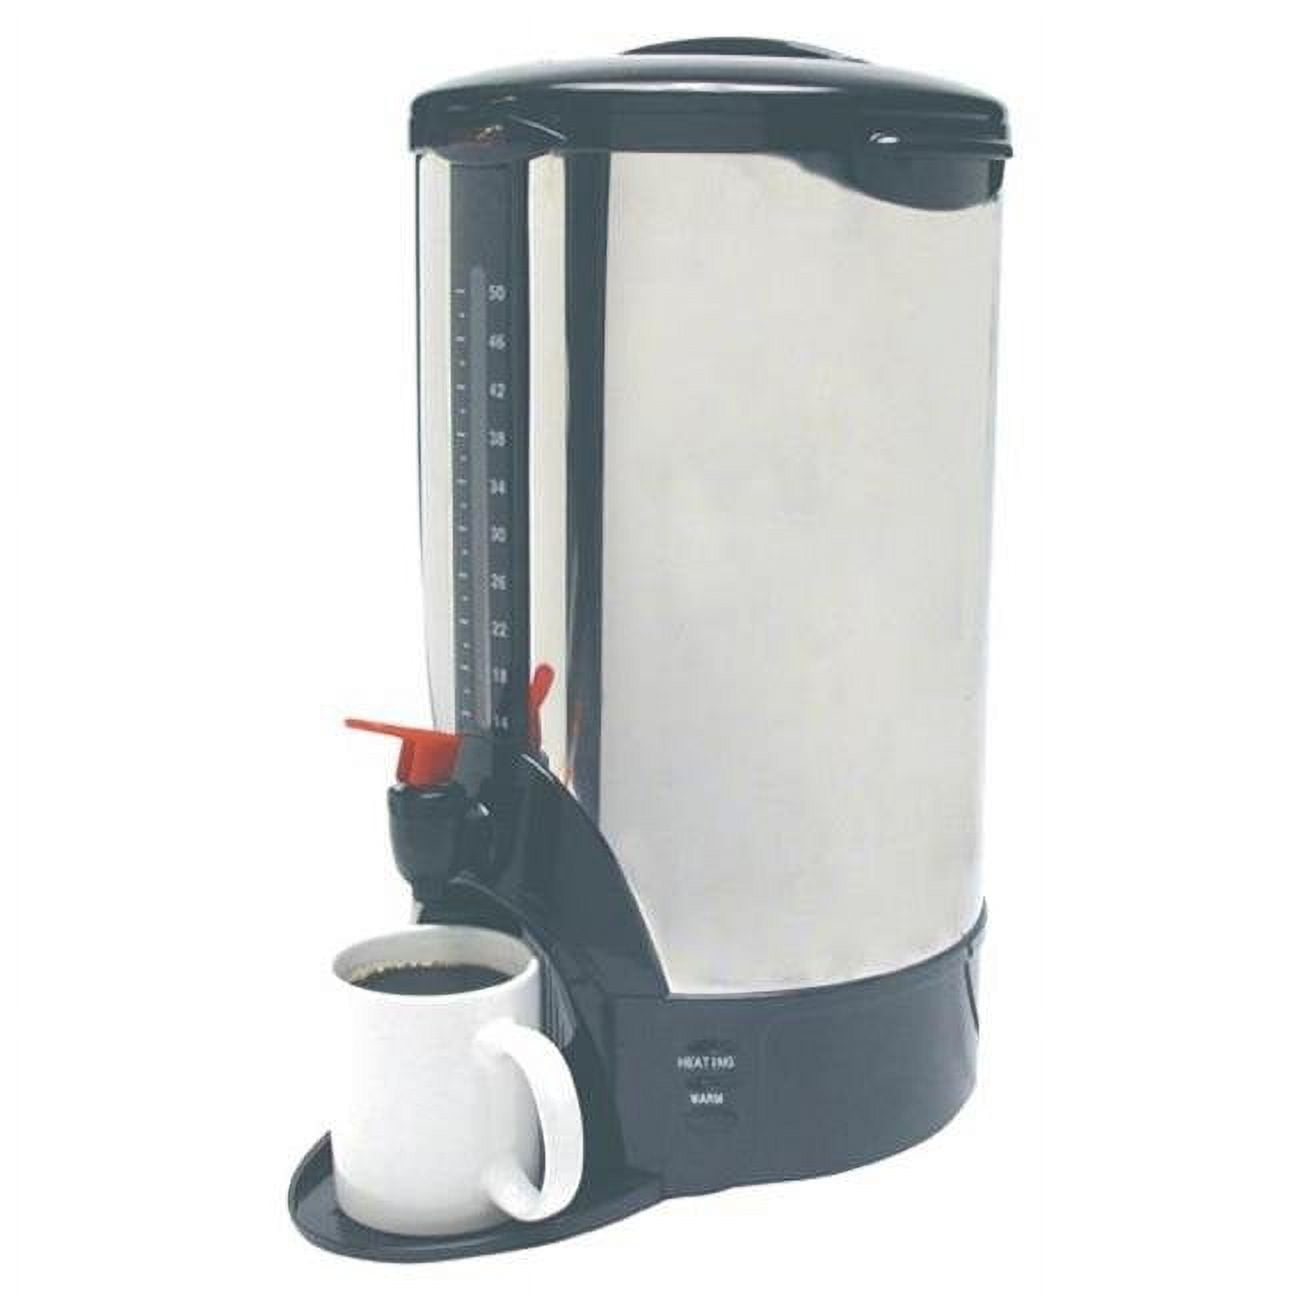 Professional Series 50-Cup Digital Coffee Urn Stainless Steel